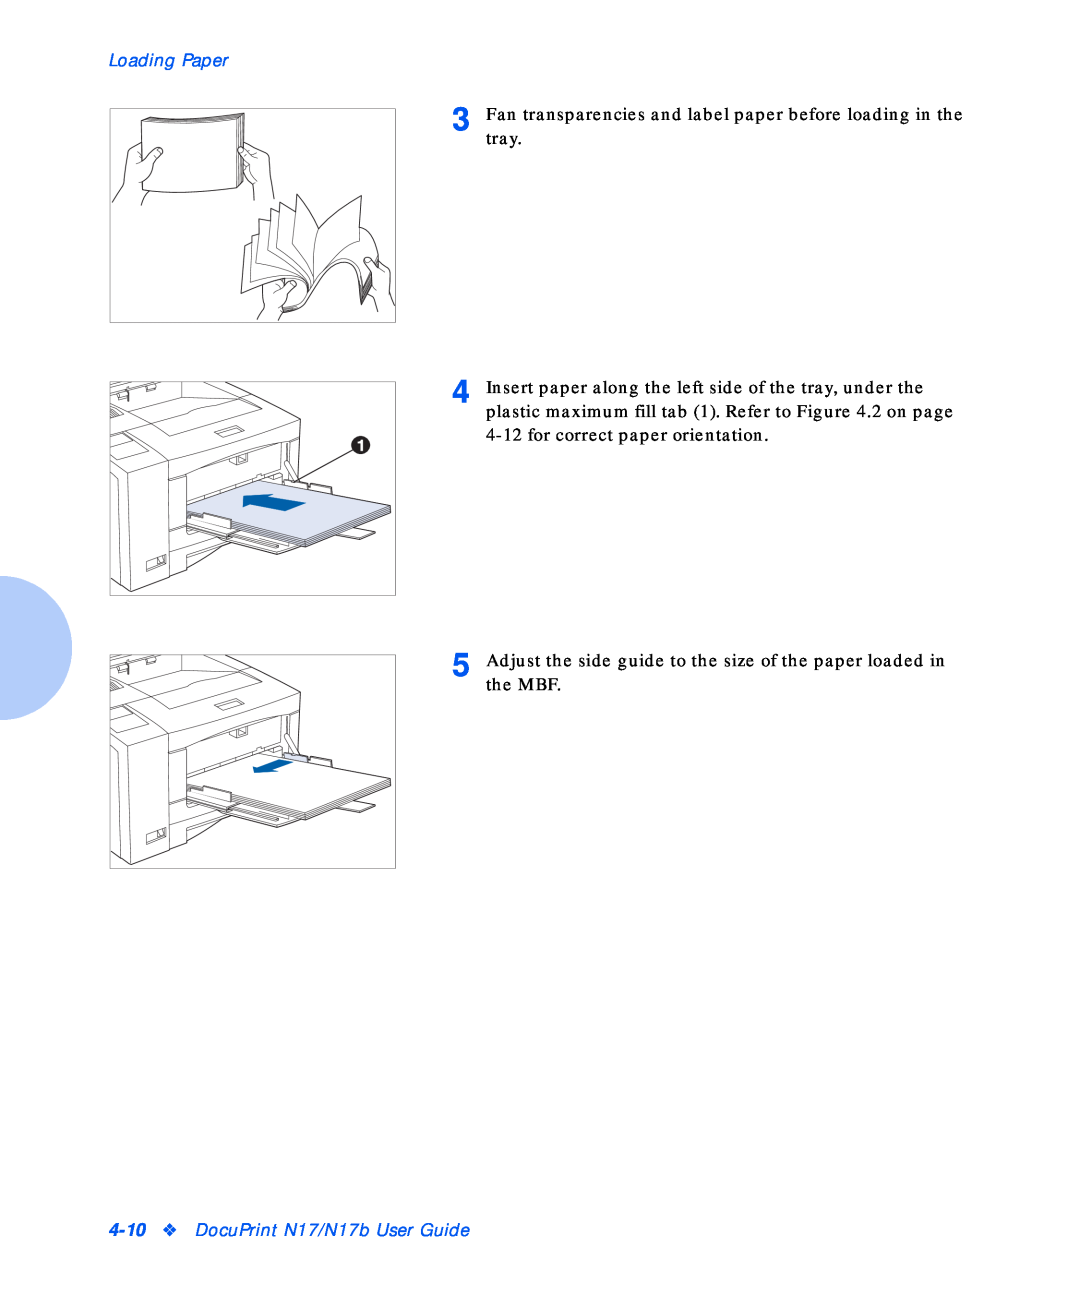 Xerox manual Loading Paper, DocuPrint N17/N17b User Guide 